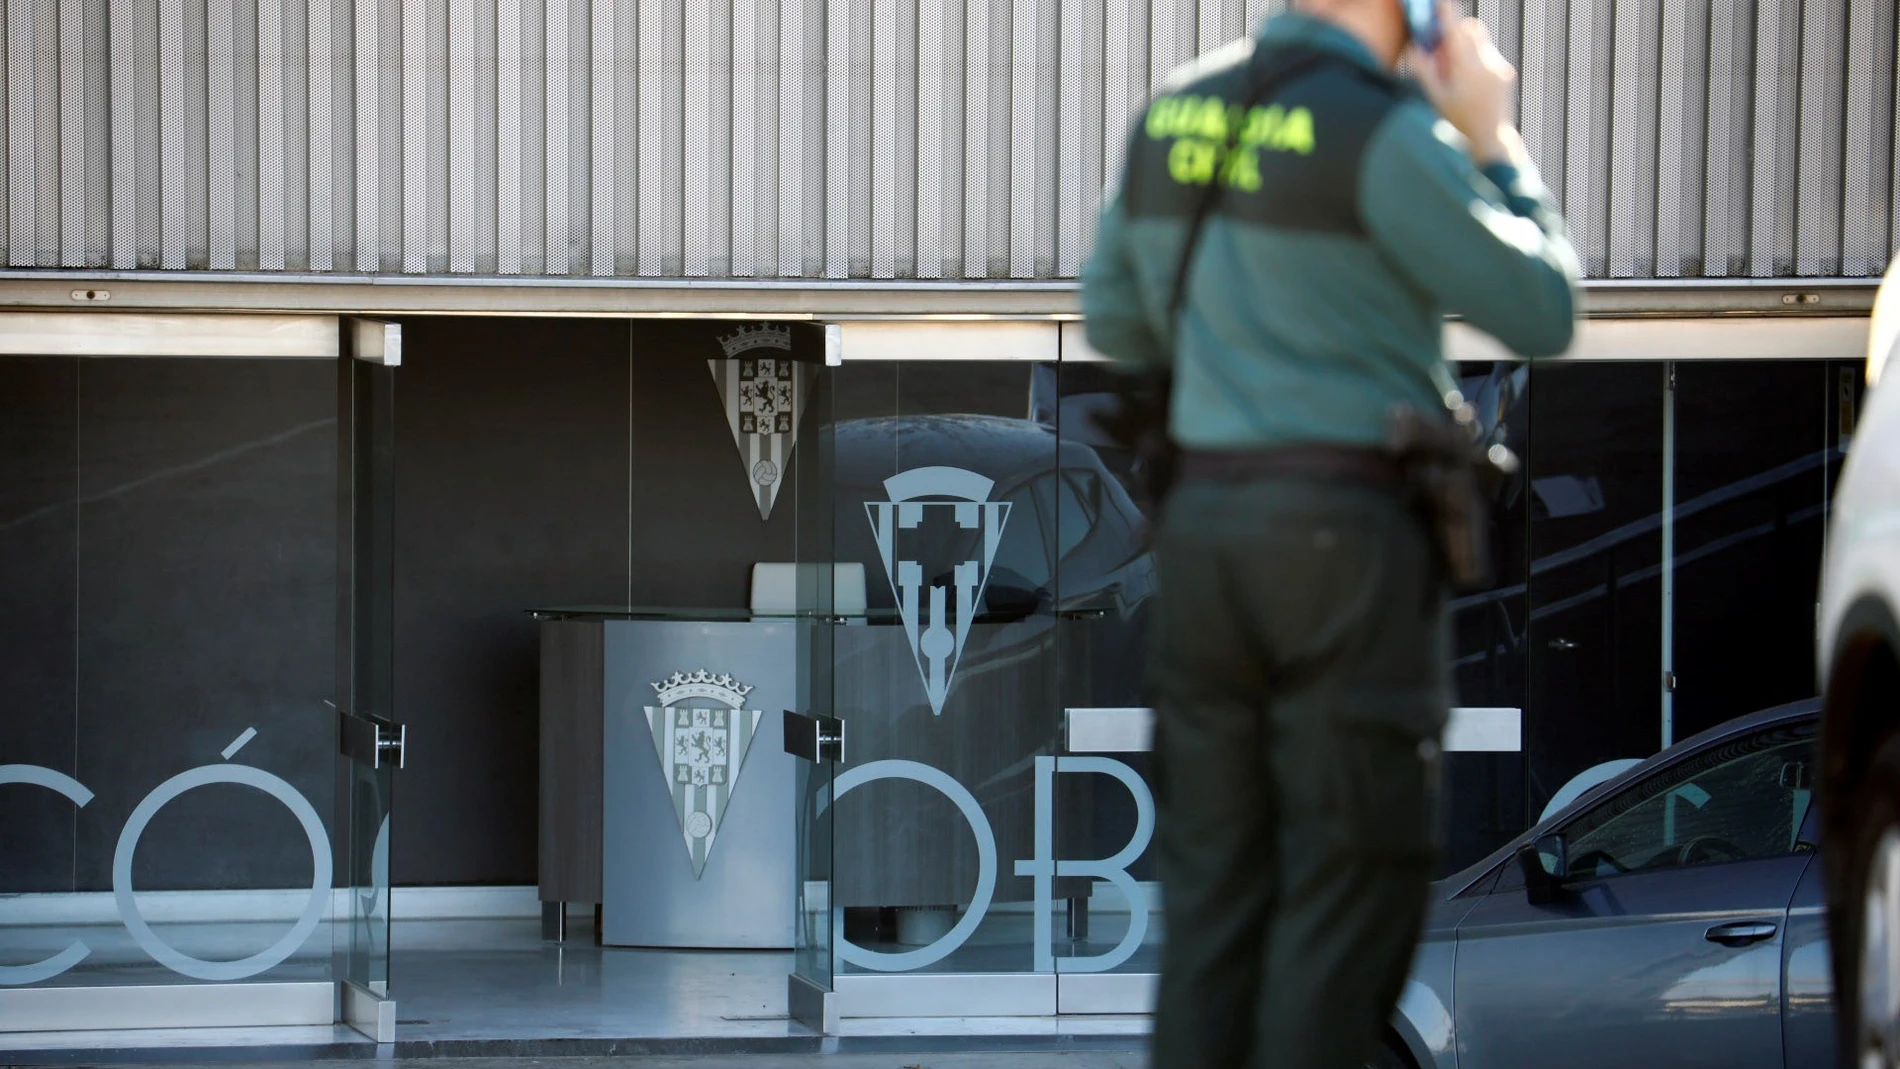 La Guardia Civil detiene al presidente del Córdoba